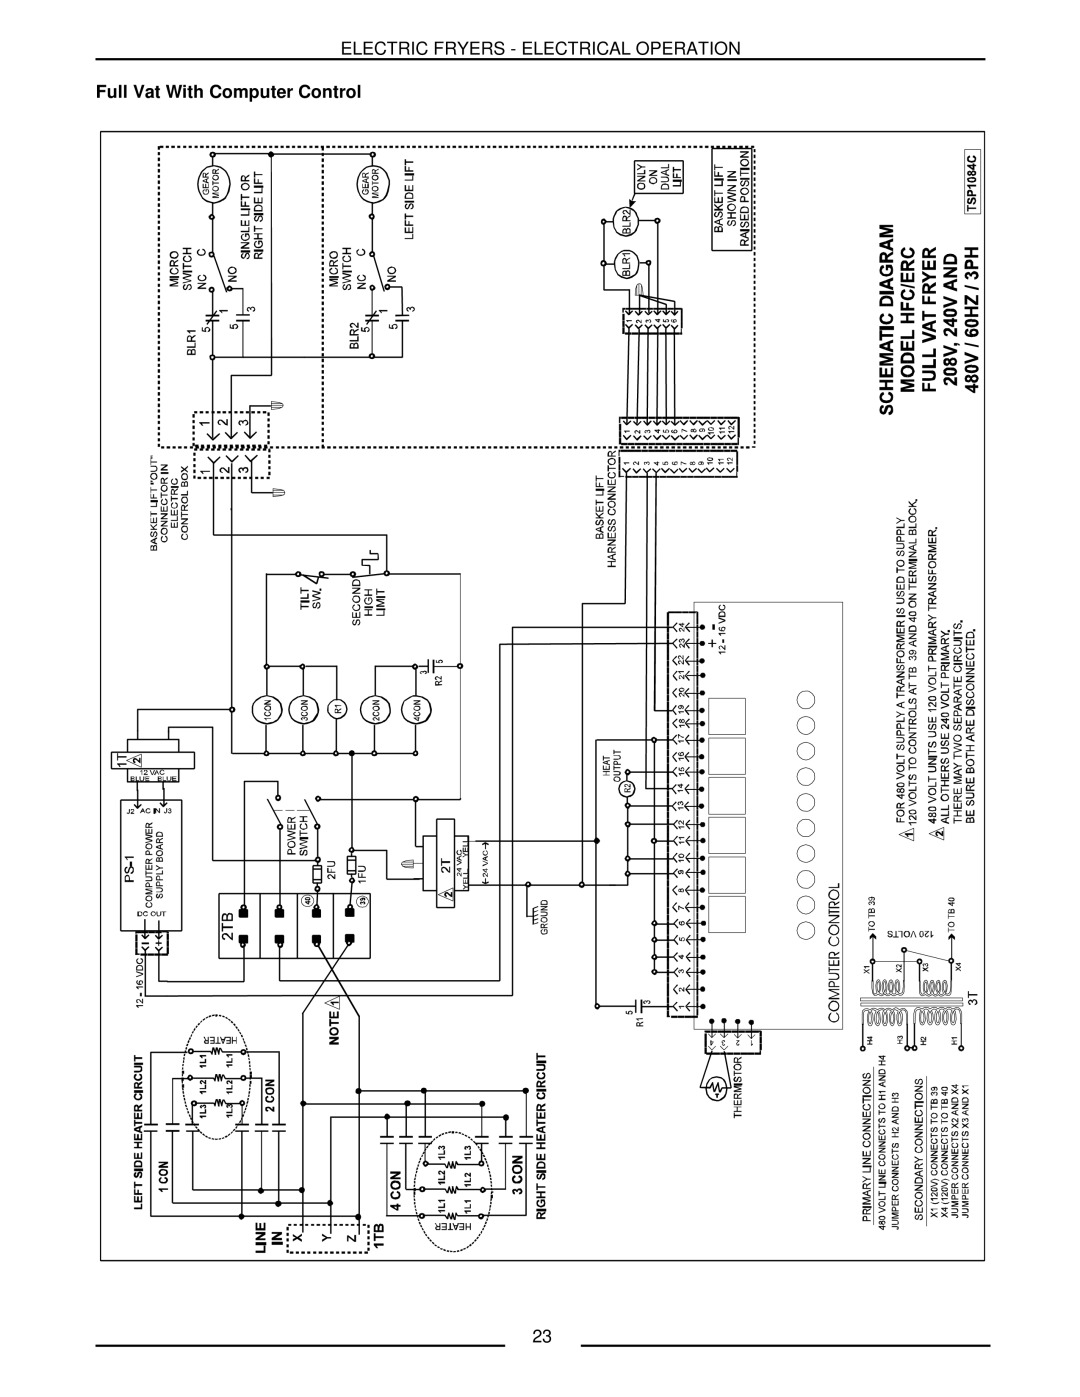 Vulcan-Hart ERD40 service manual Full Vat With Computer Control 